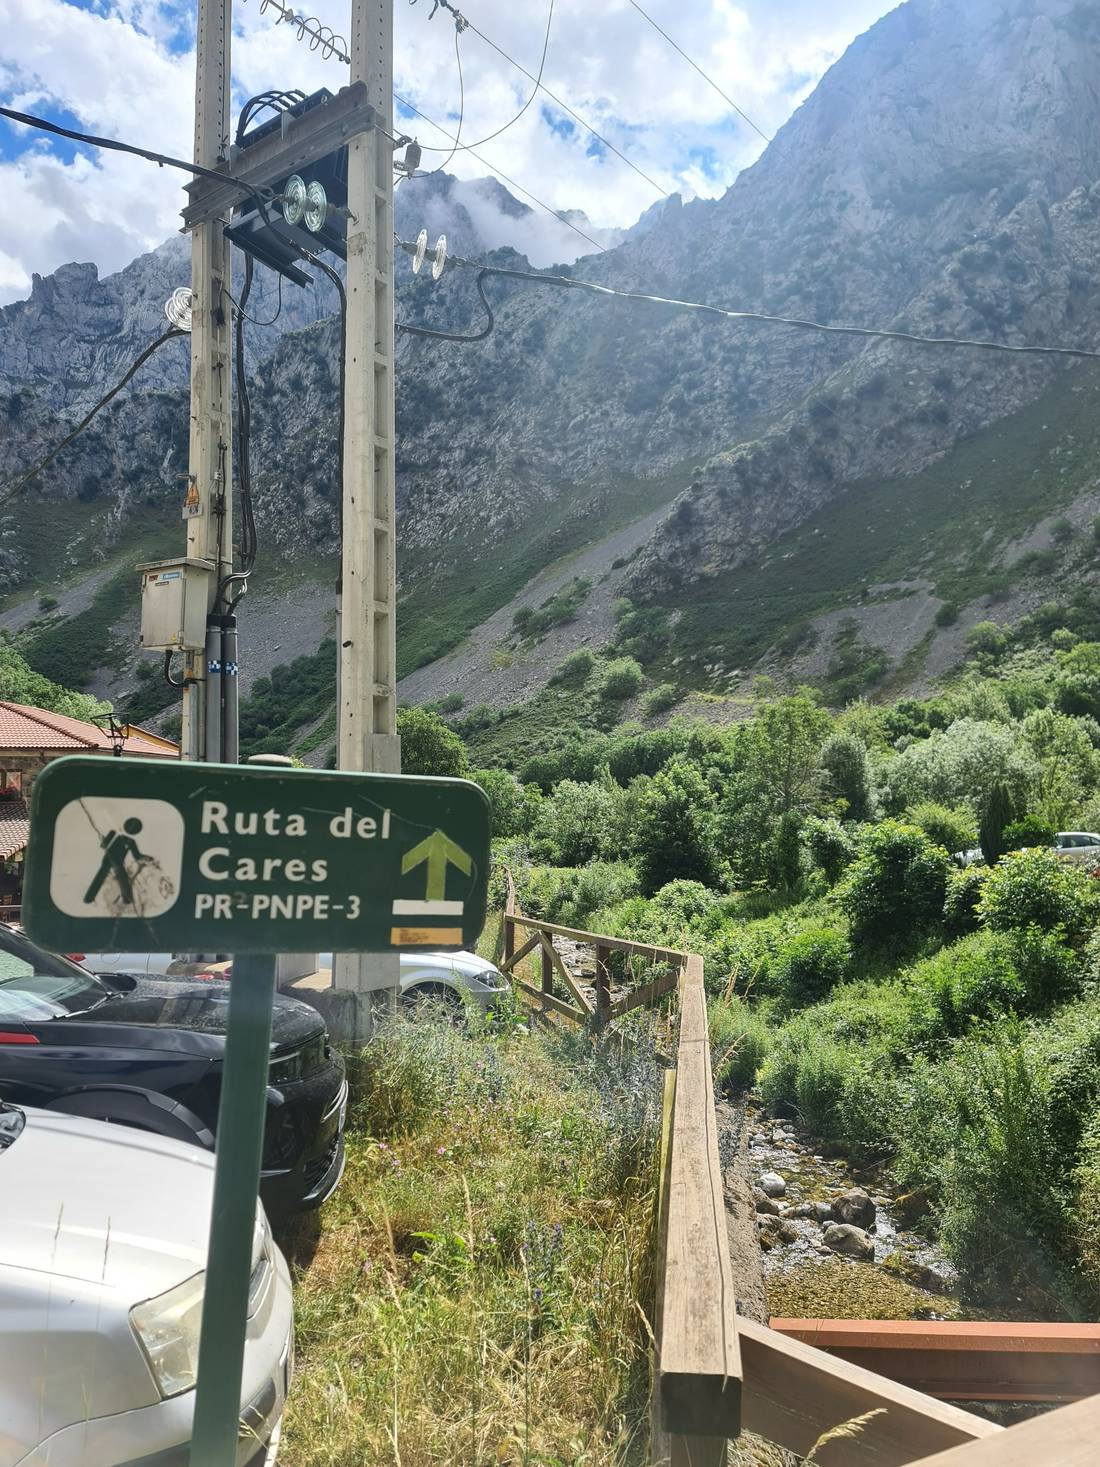 Start of the route in Caín de Valedón hamlet.